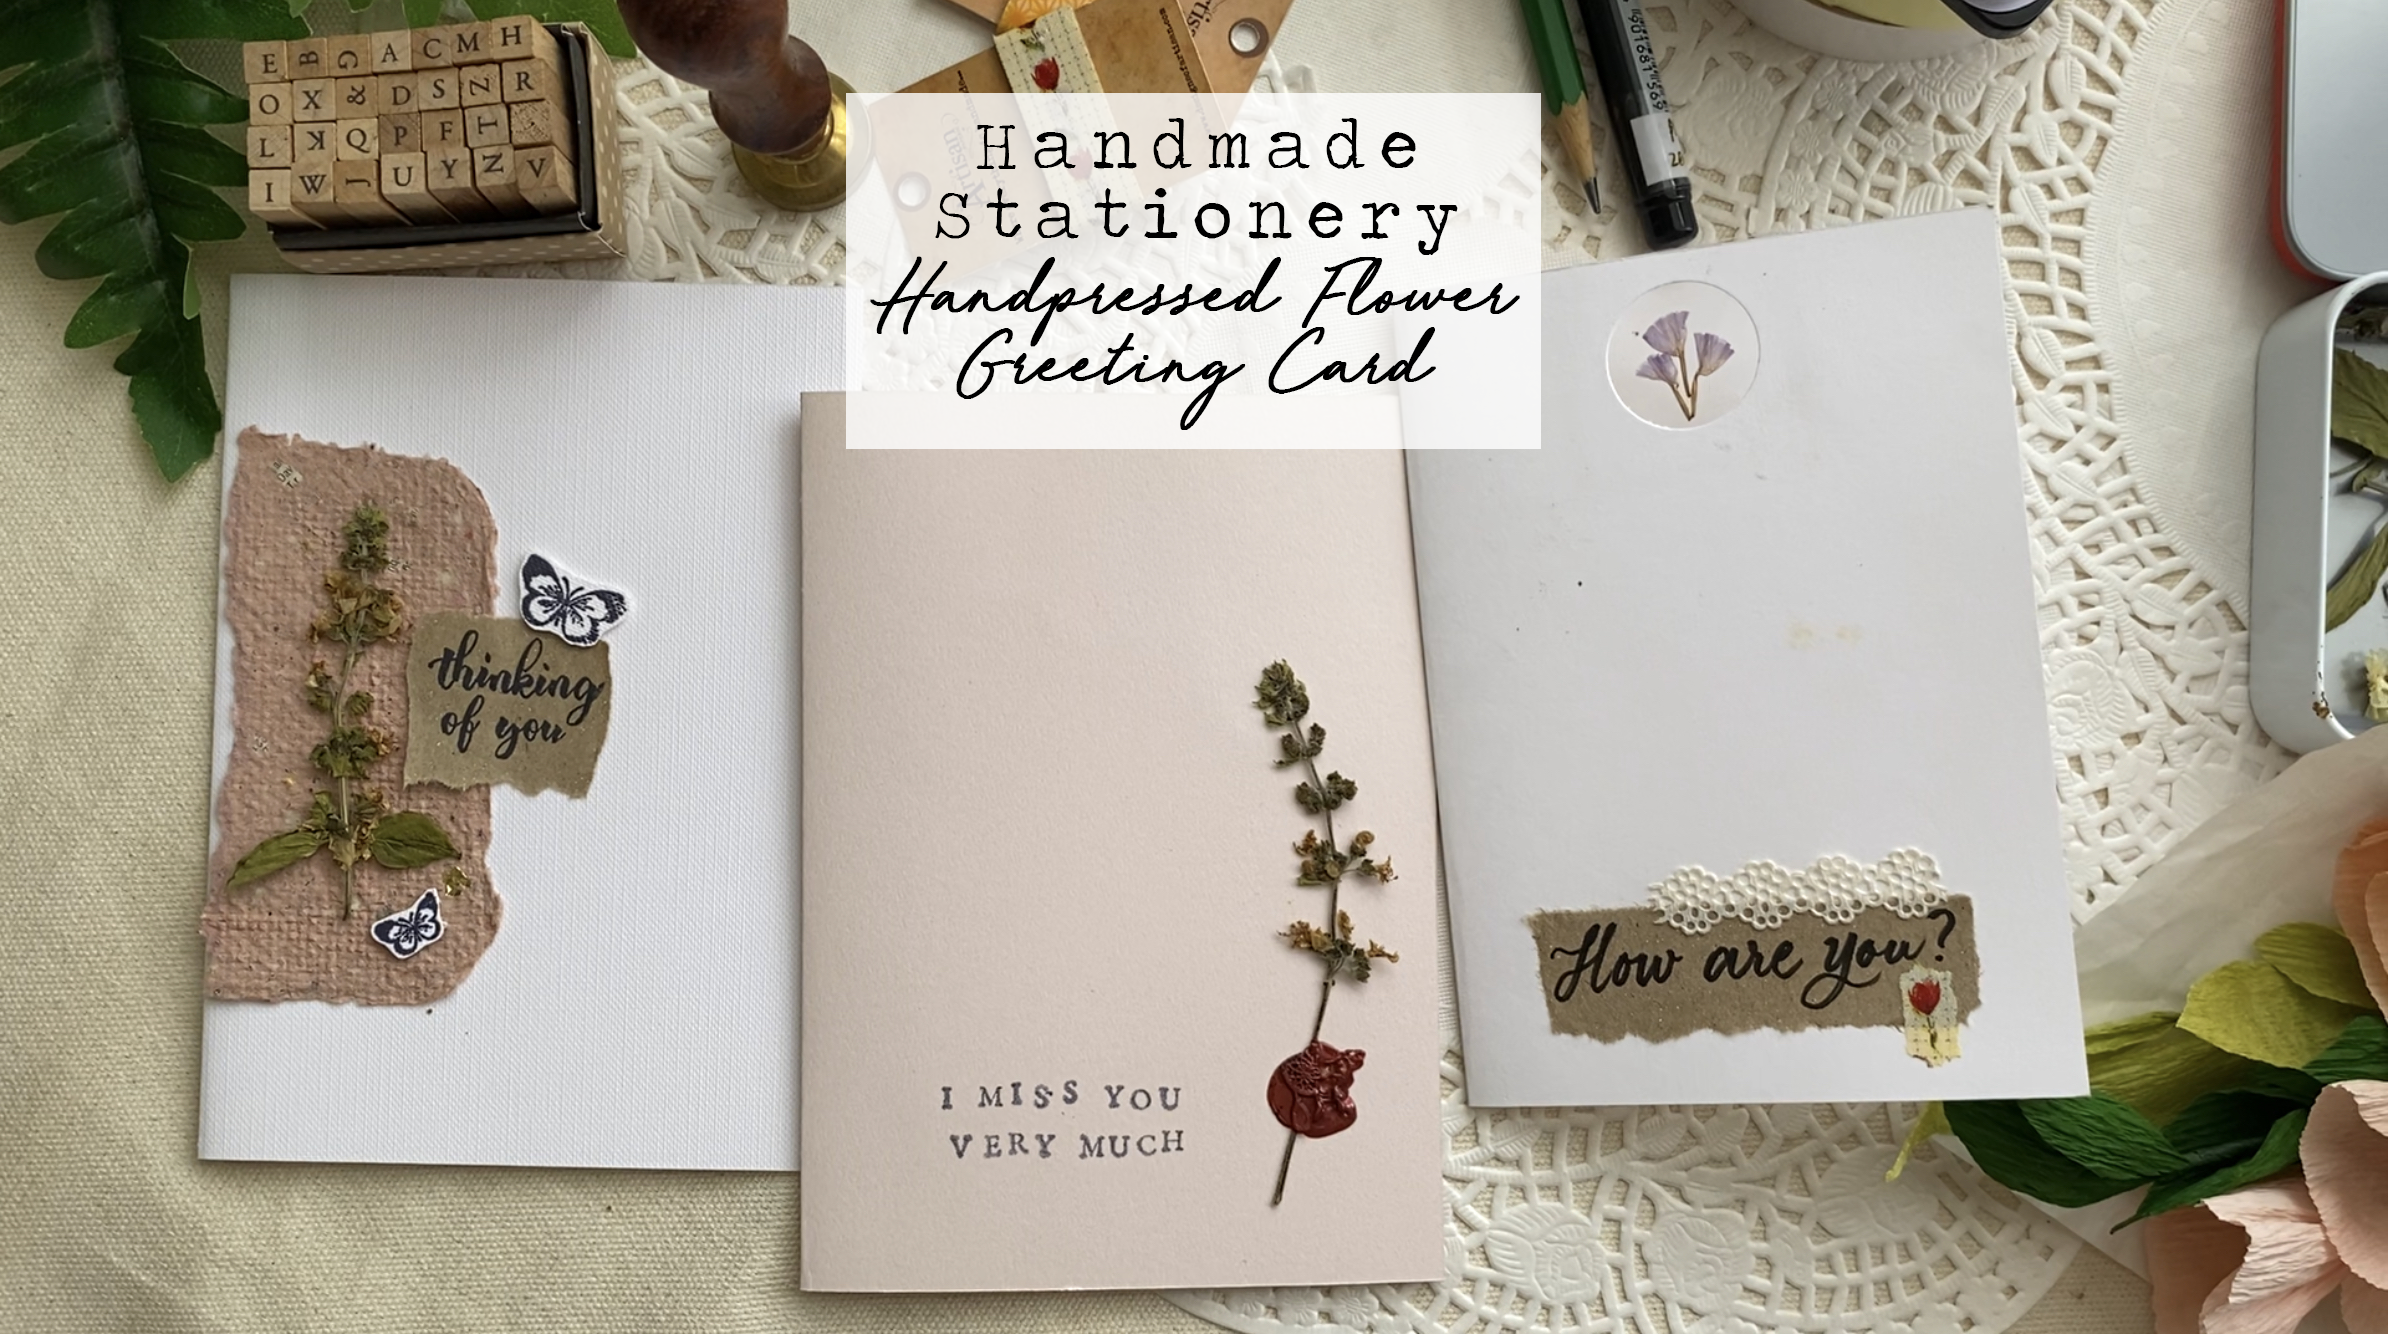 3 Hand Pressed Flowers Greeting Card